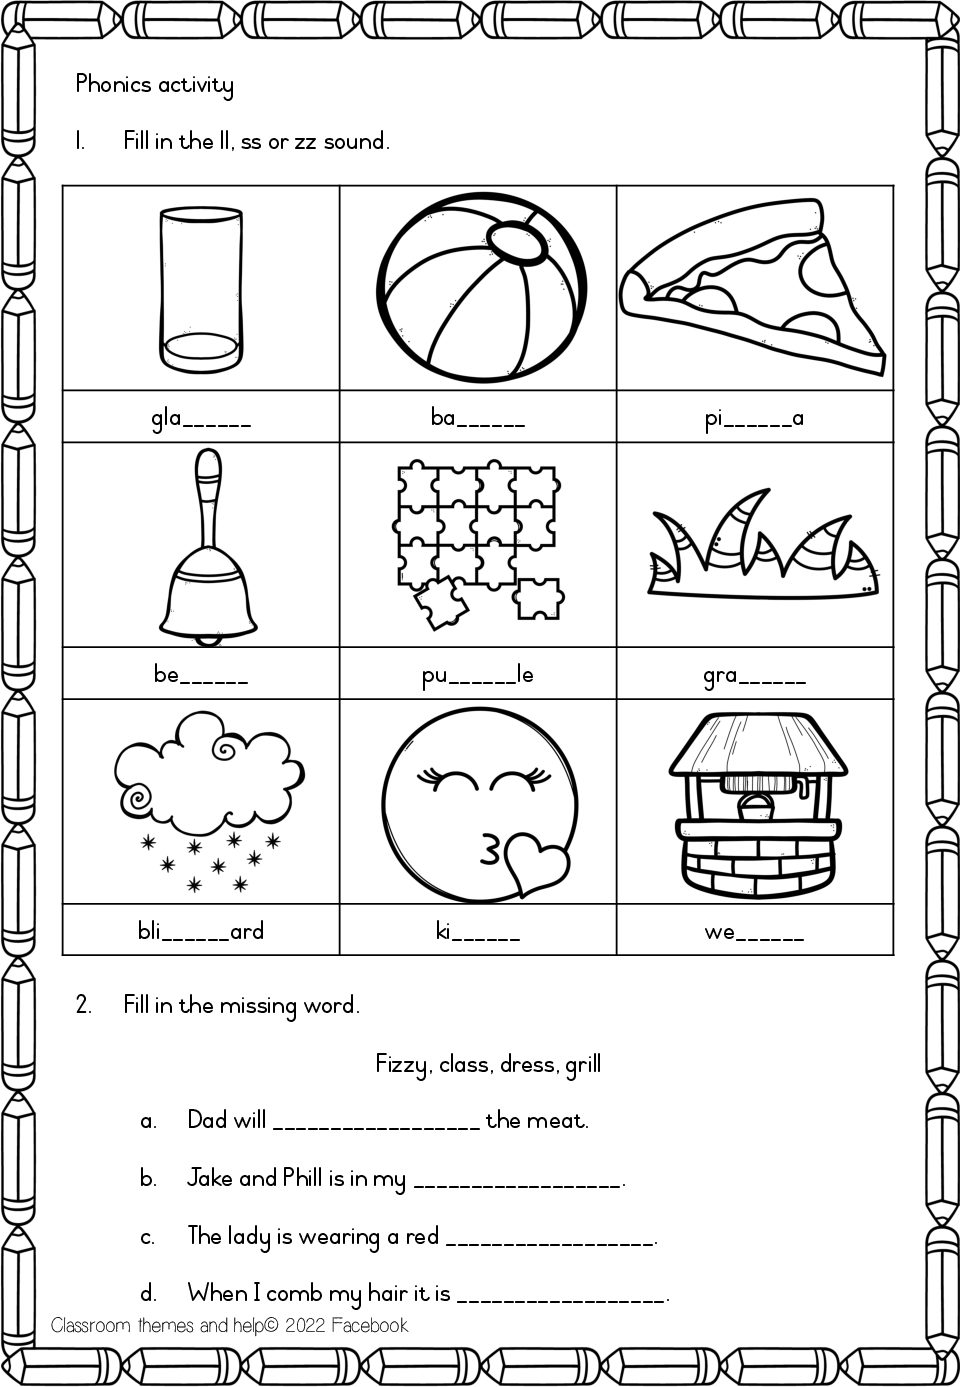 English home language activity book, grade 2, term 3 • Teacha!